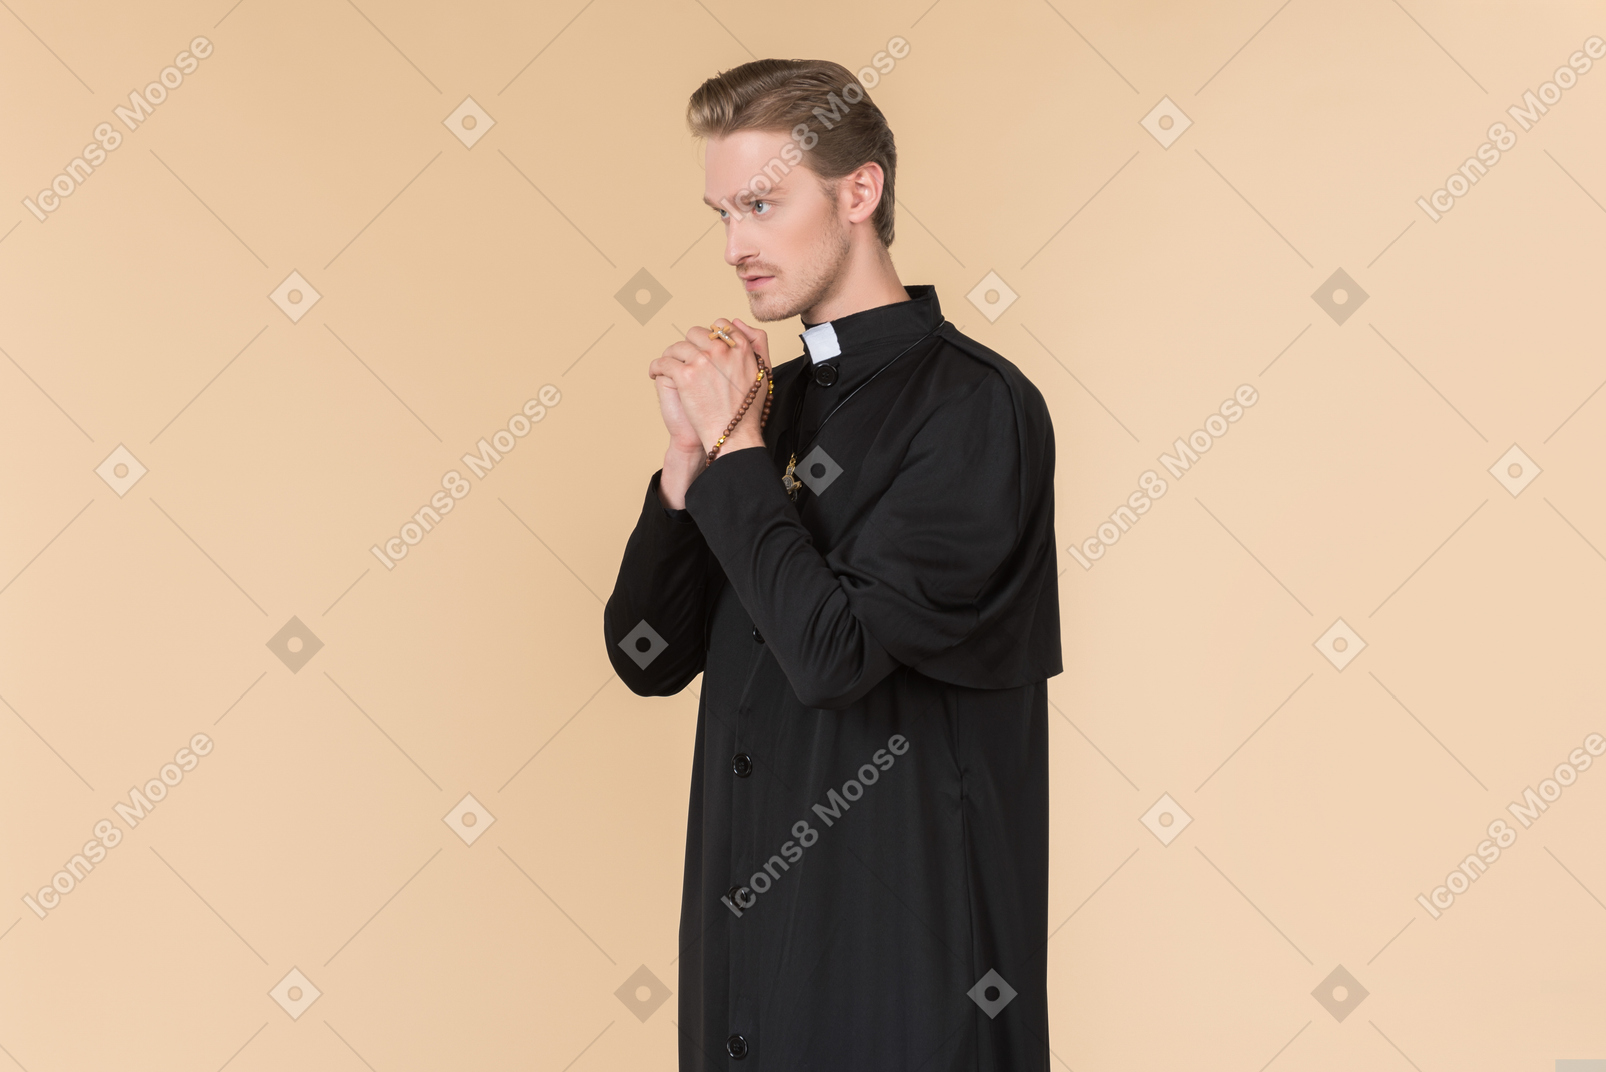 Catholic priest praying with eyes closed using prayer beads